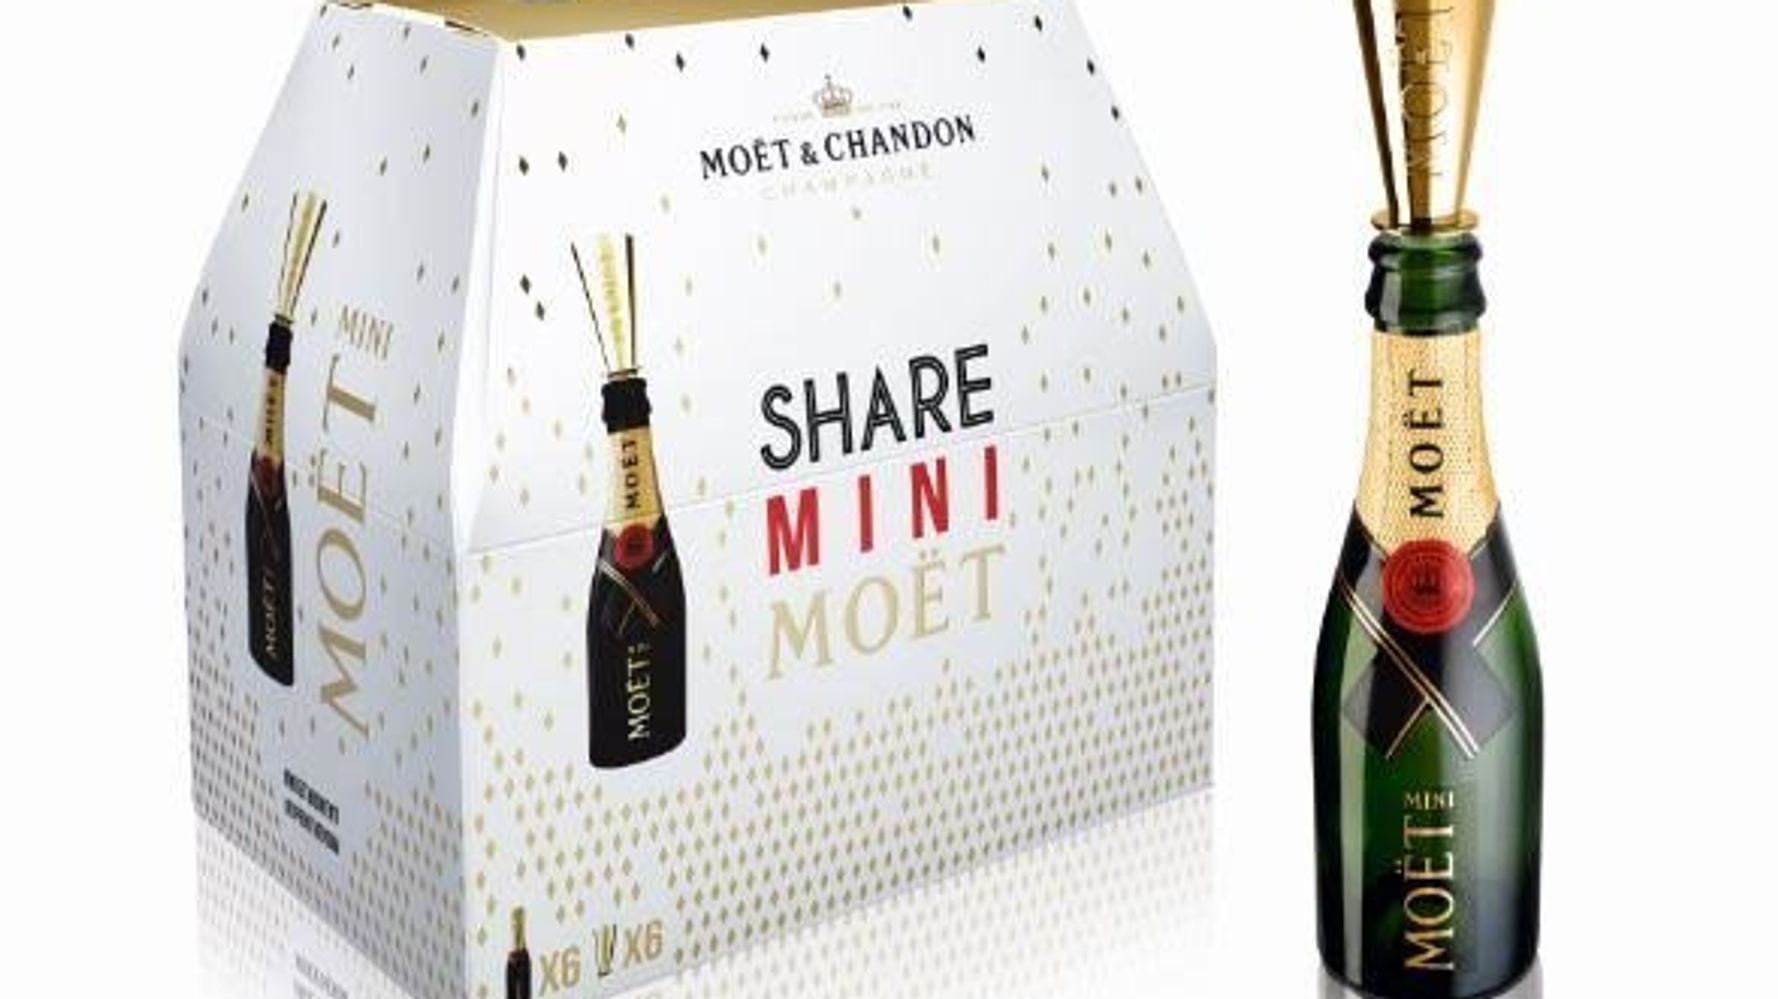 Where to buy Moet & Chandon Share Mini Moet Brut Pack, Champagne, France